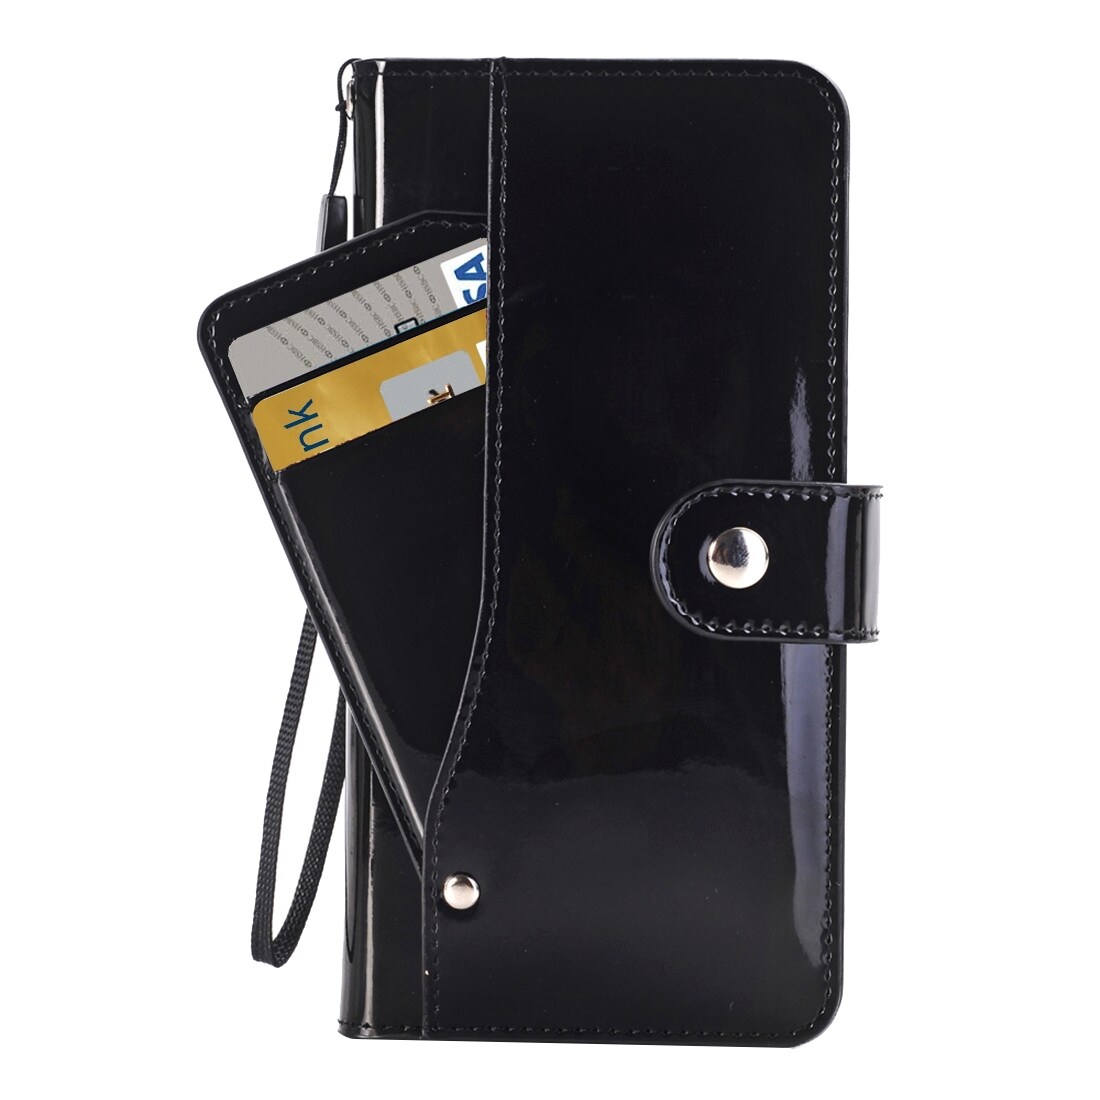 Plånboksfodral till iPhone 8 / 7 - Svart